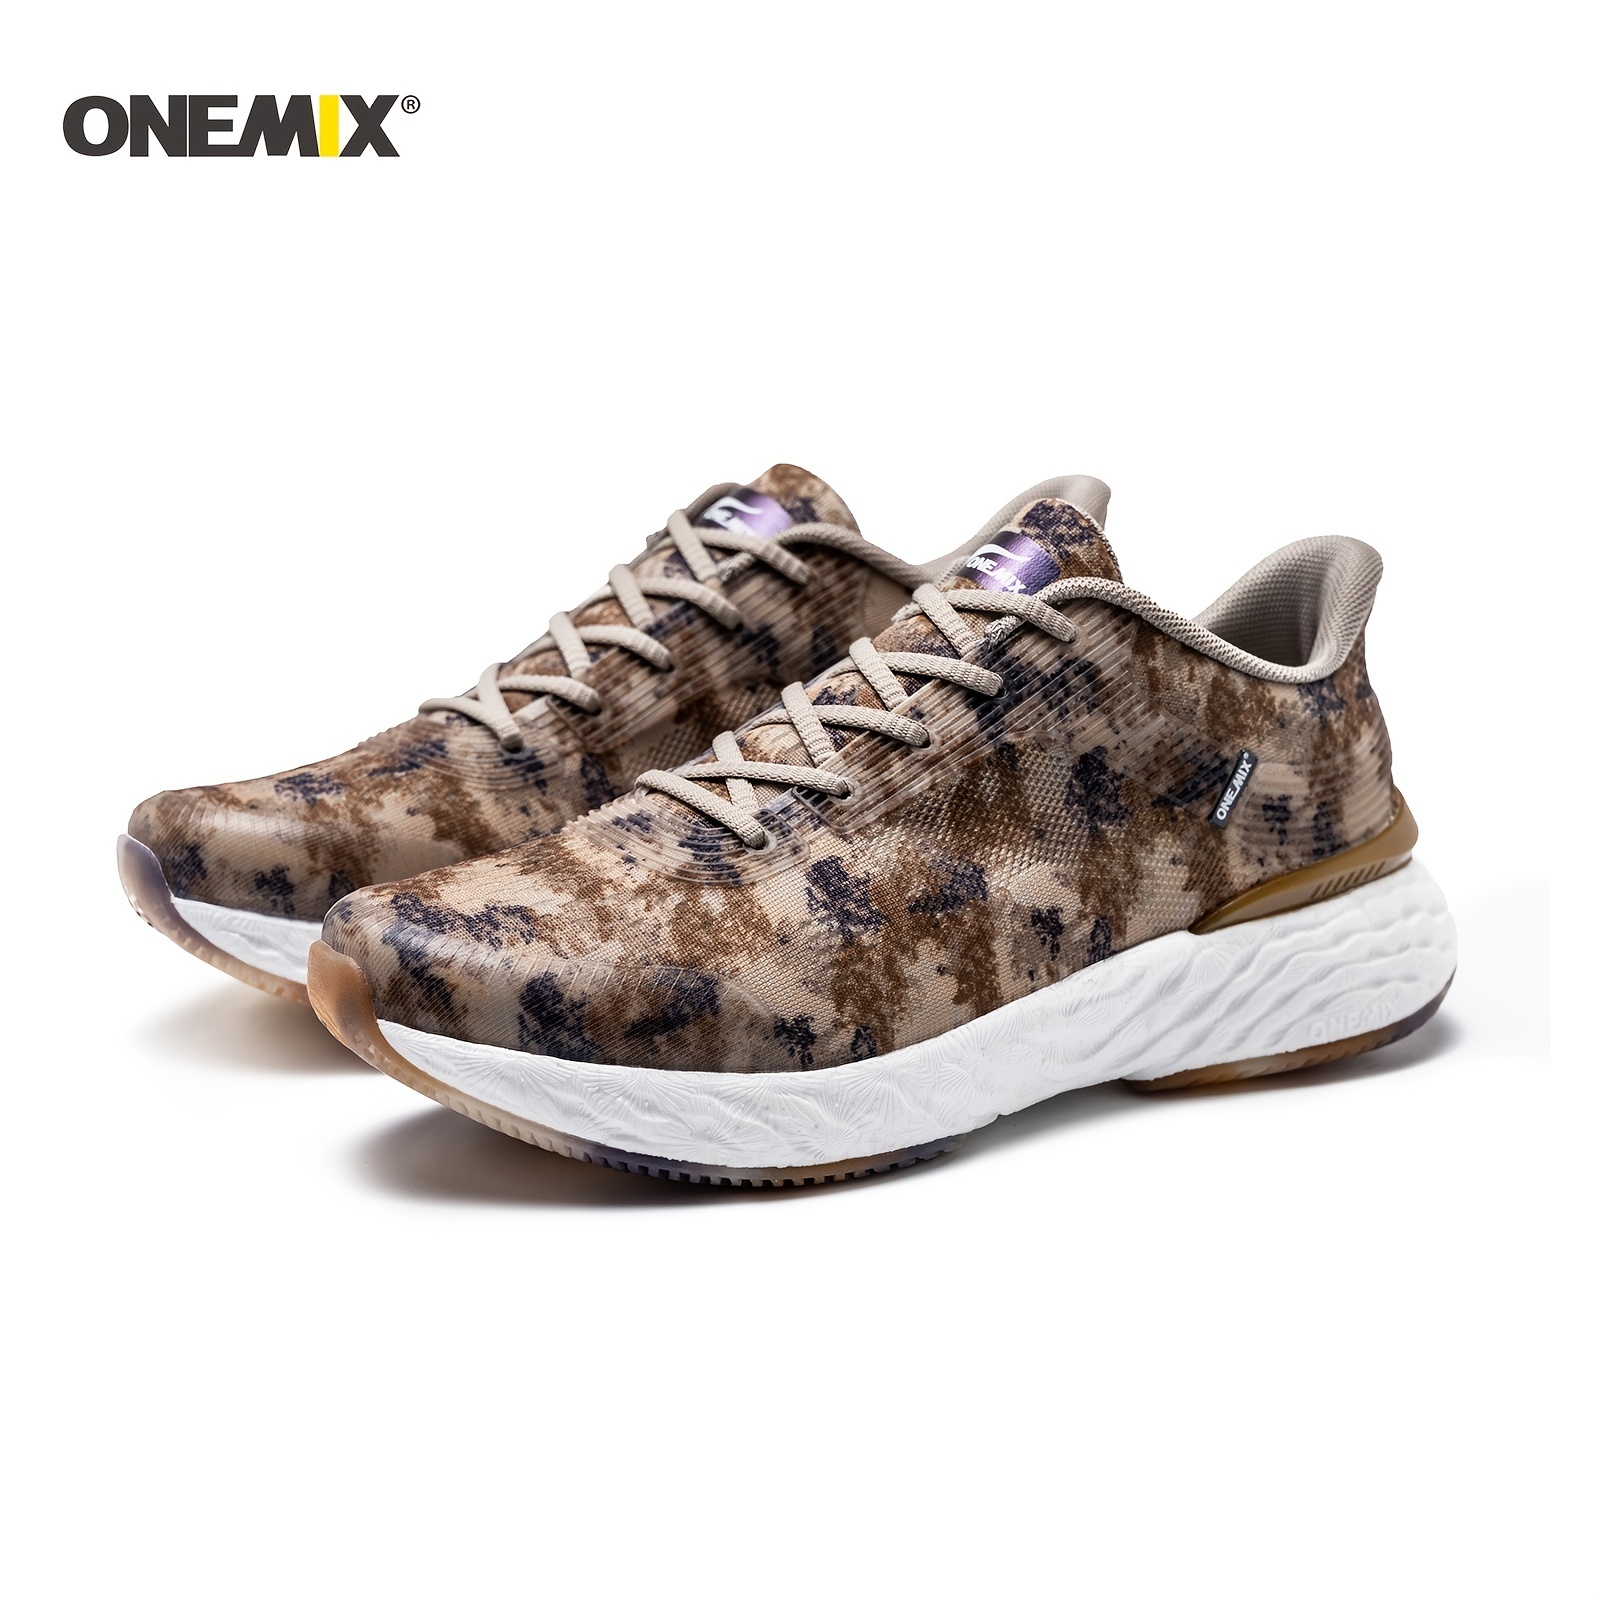 Comprar ONEMIX, zapatillas de correr para hombre, zapatillas de deporte  impermeables Vamp, calzado deportivo para exteriores, zapatillas para  caminar, talla EU 39-47